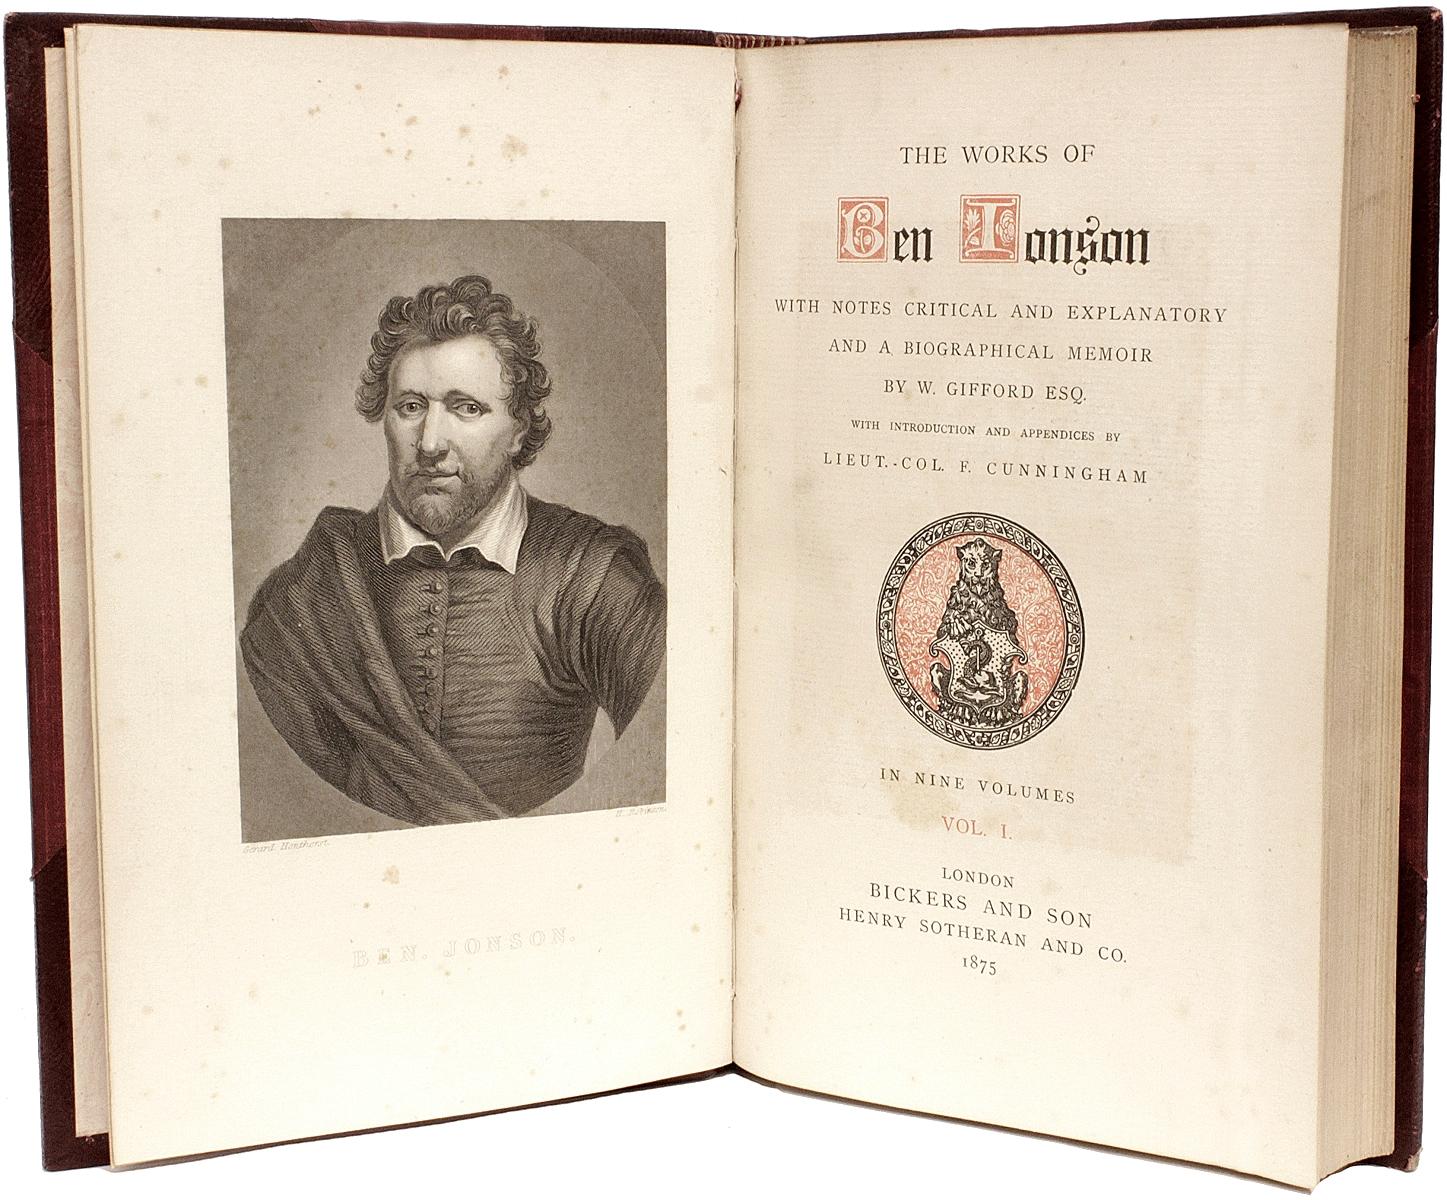 Author: JONSON, Ben. 

Title: The Works of Ben Jonson.

Publisher: London: Bickers & Son, 1875.

9 vols., 9